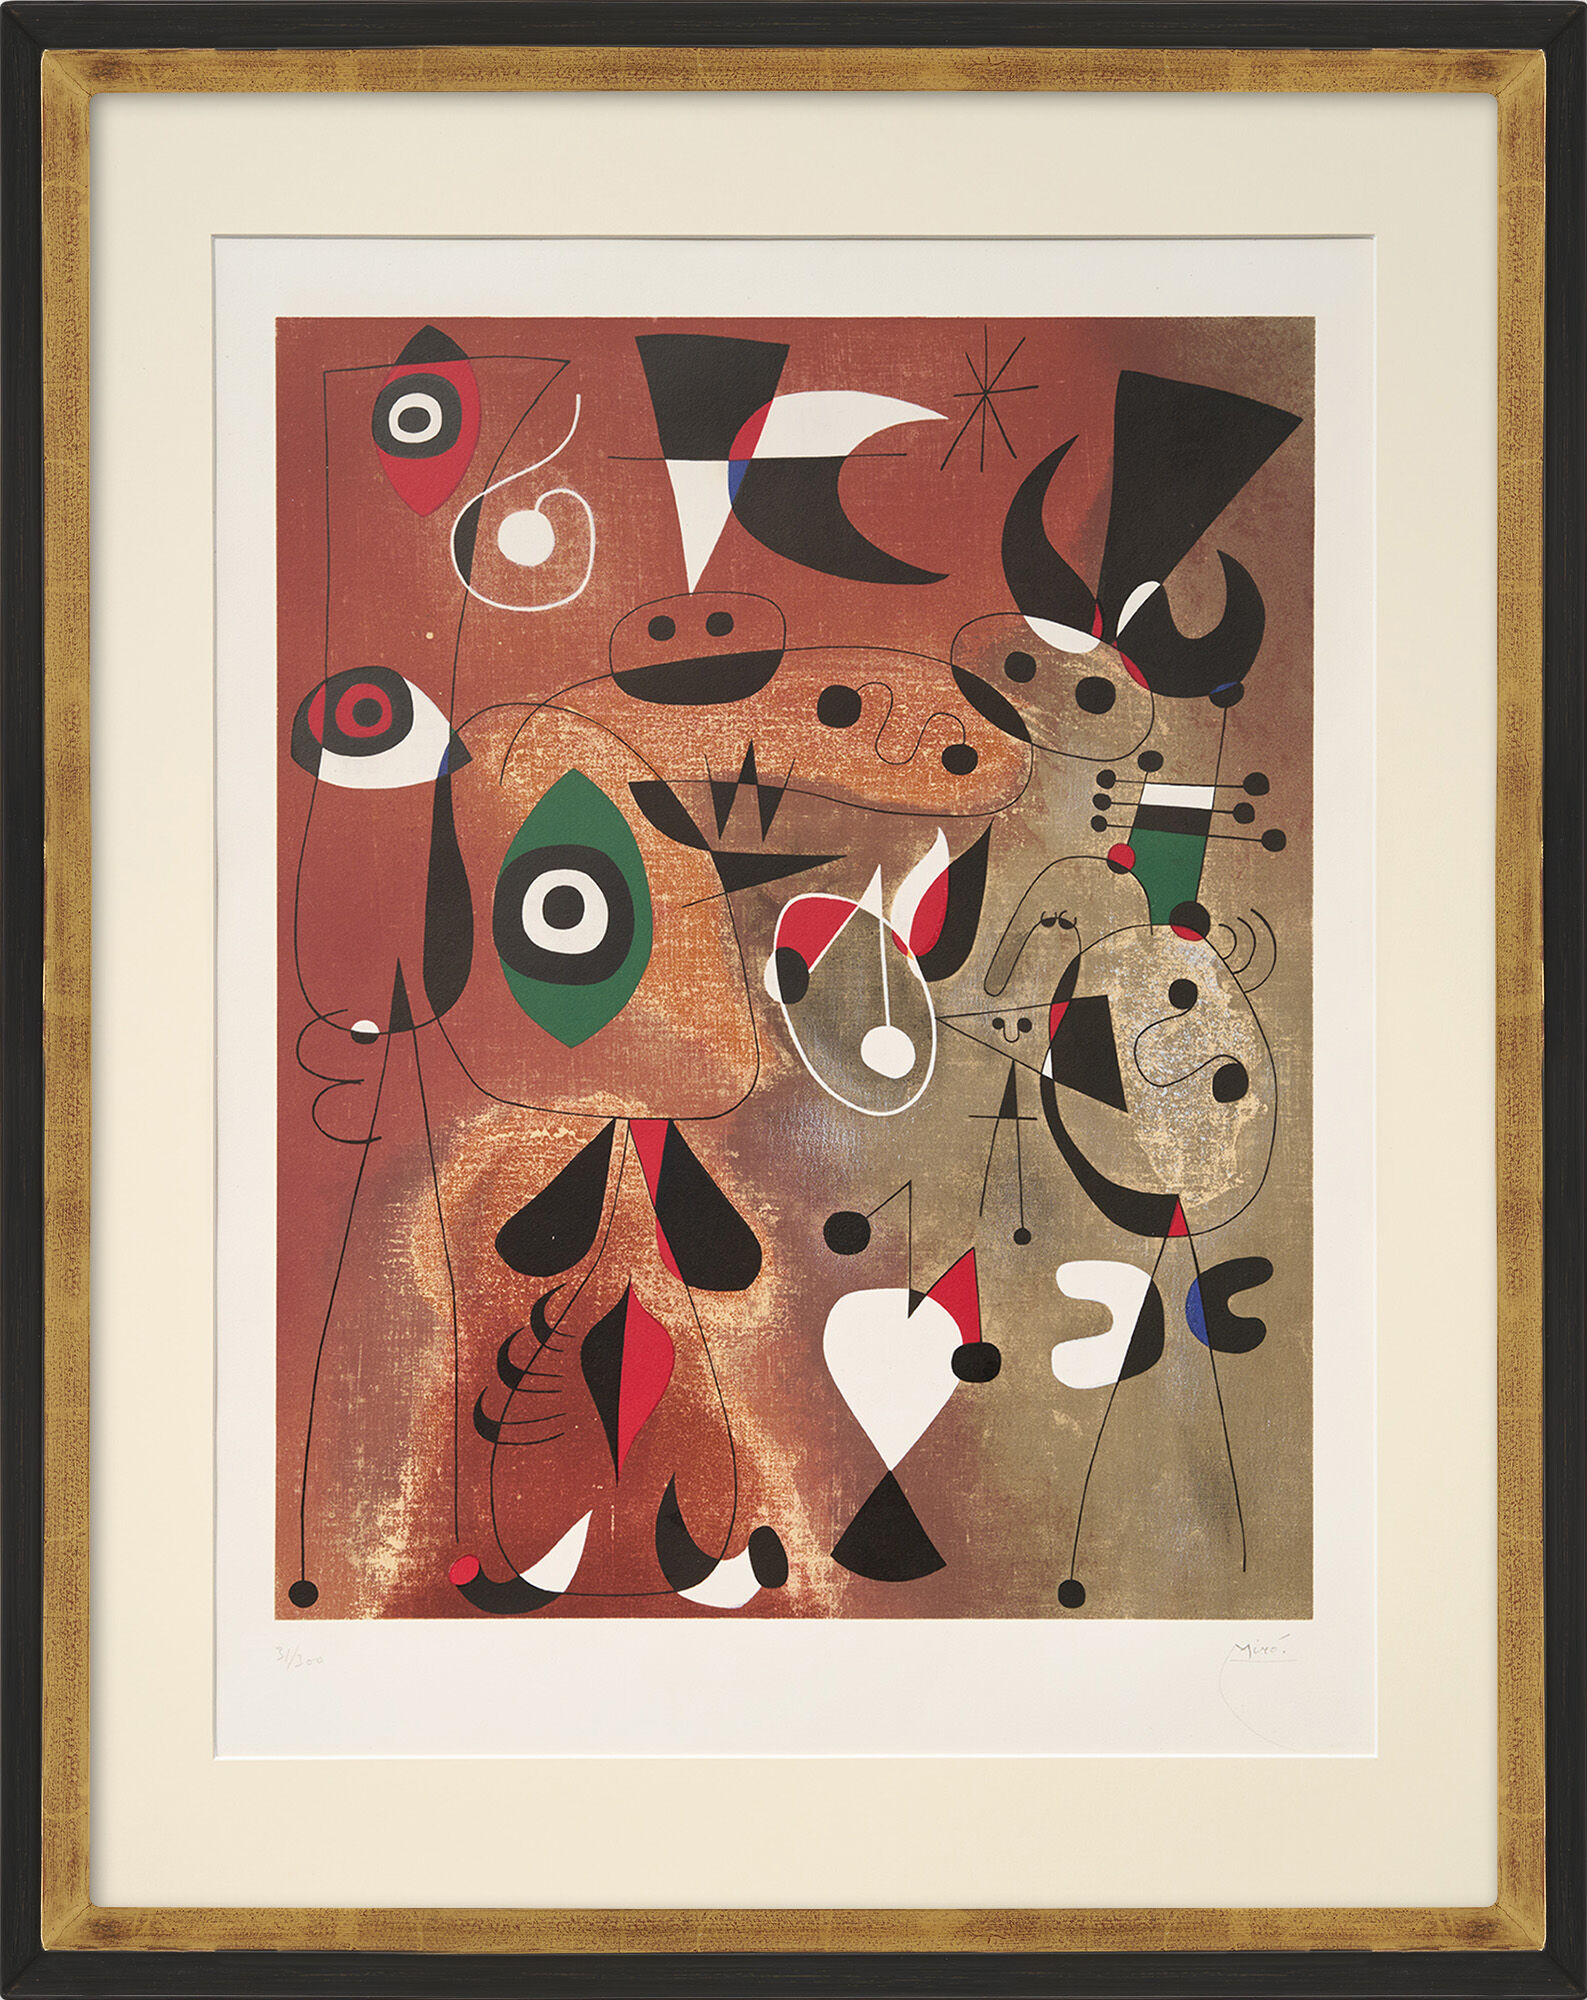 Bild "Femme, oiseau, etoile" (1960) von Joan Miró